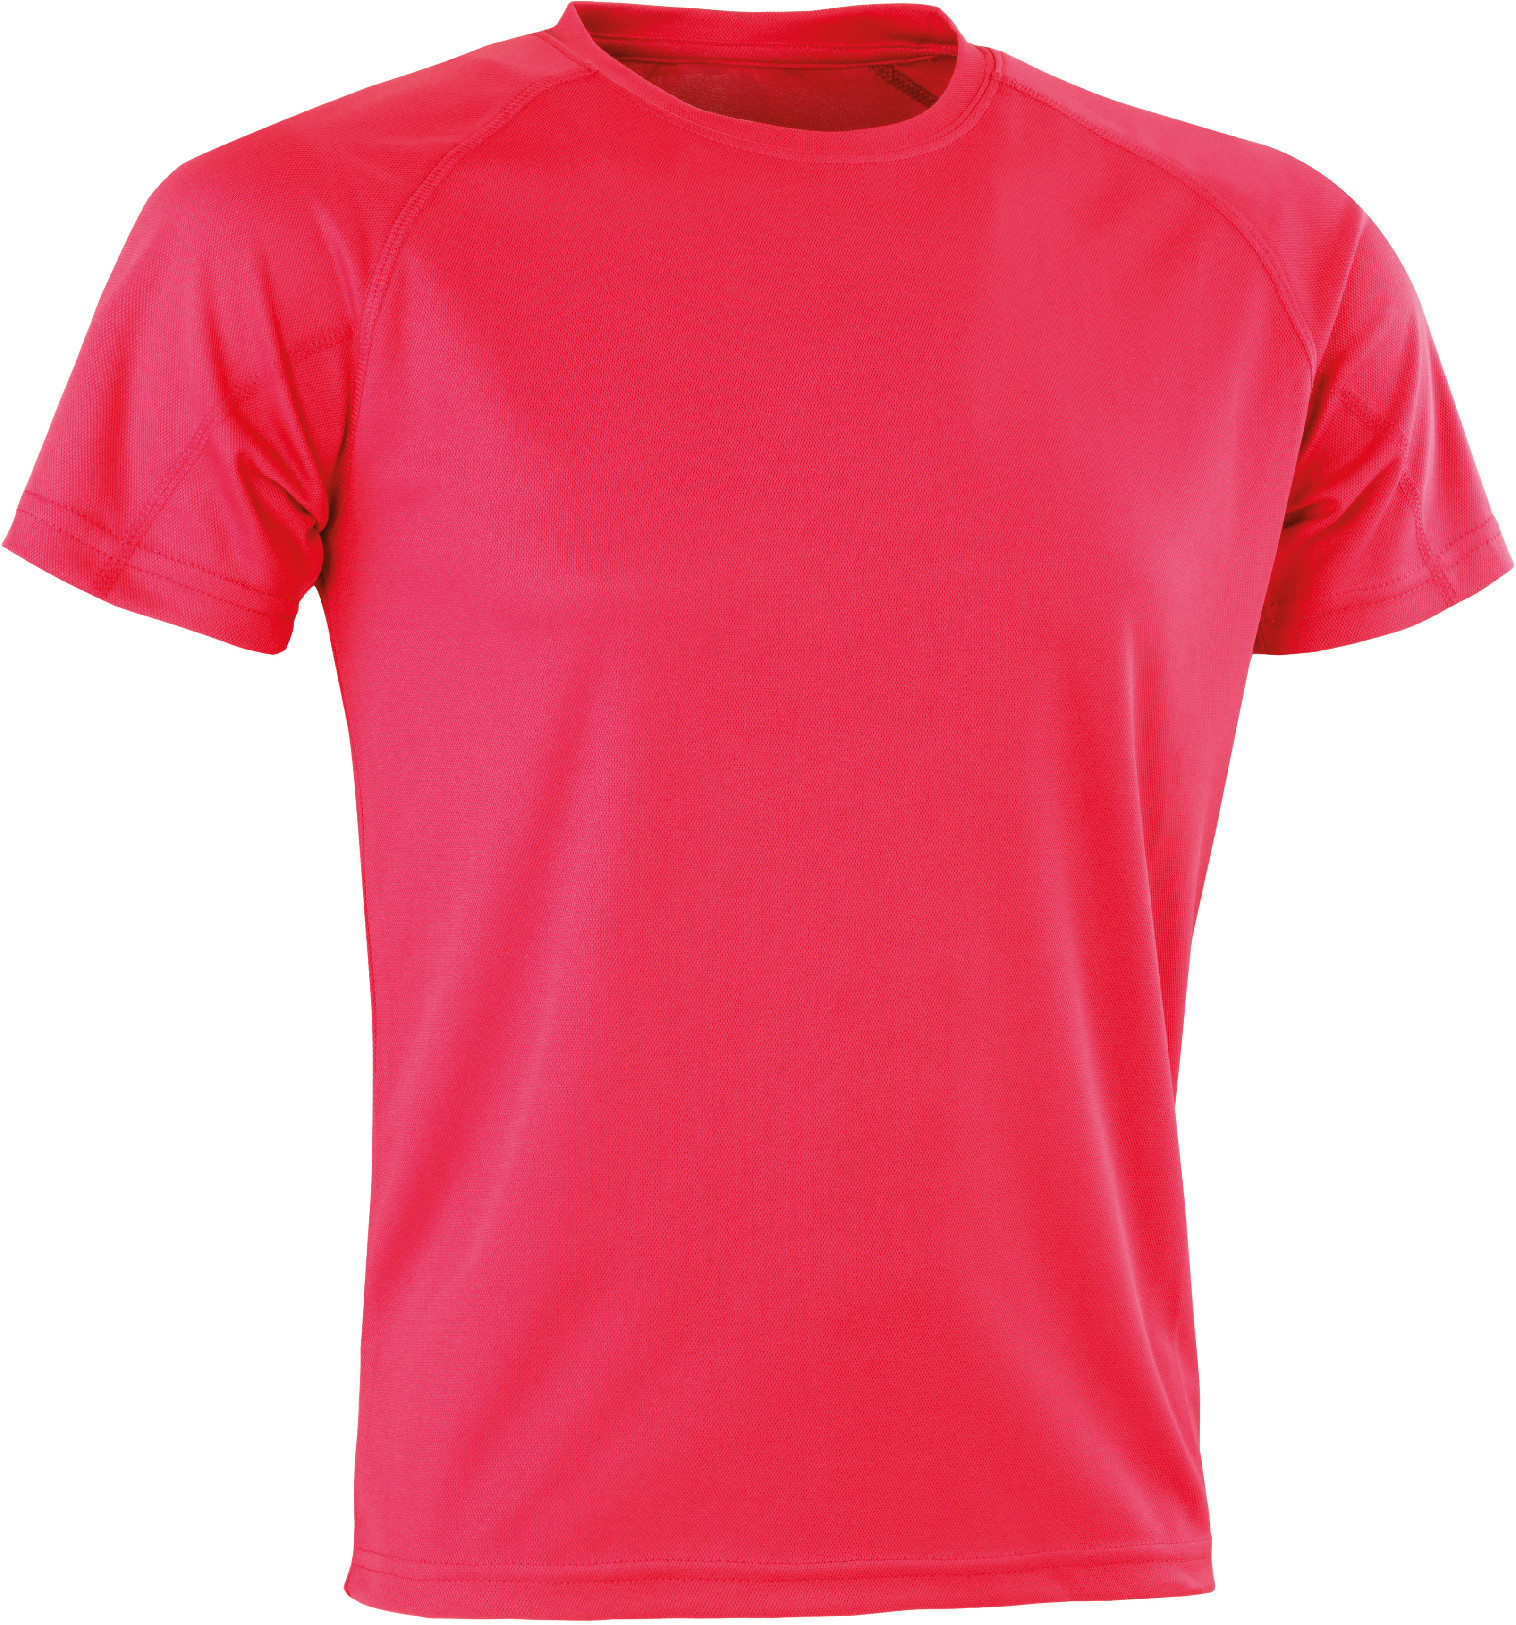 Sportovní tričko Aircool S287X Barva: neon pink, Velikost: S